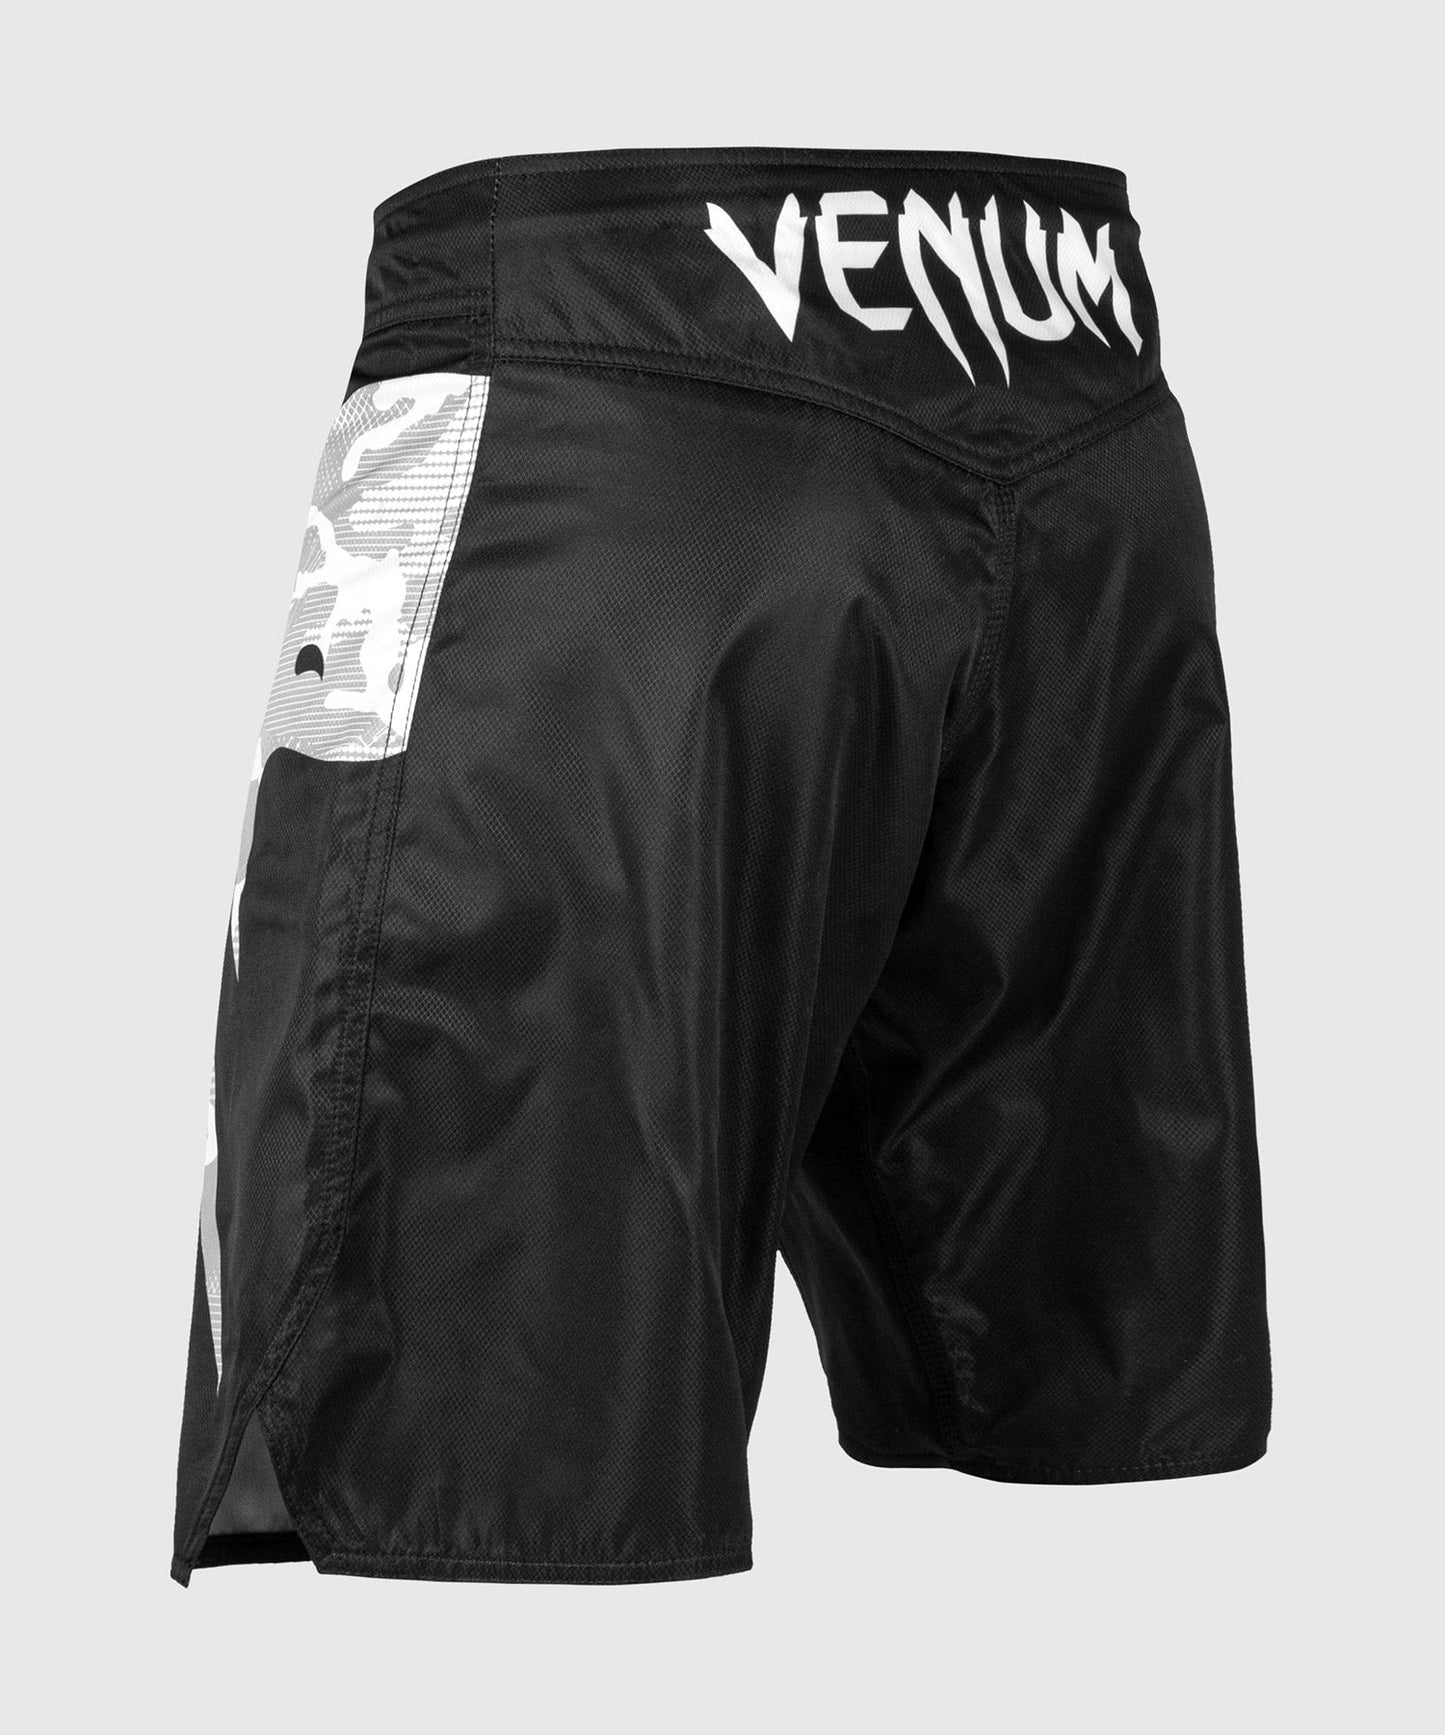 Venum Light 3.0 Fightshorts - Black/White Camo